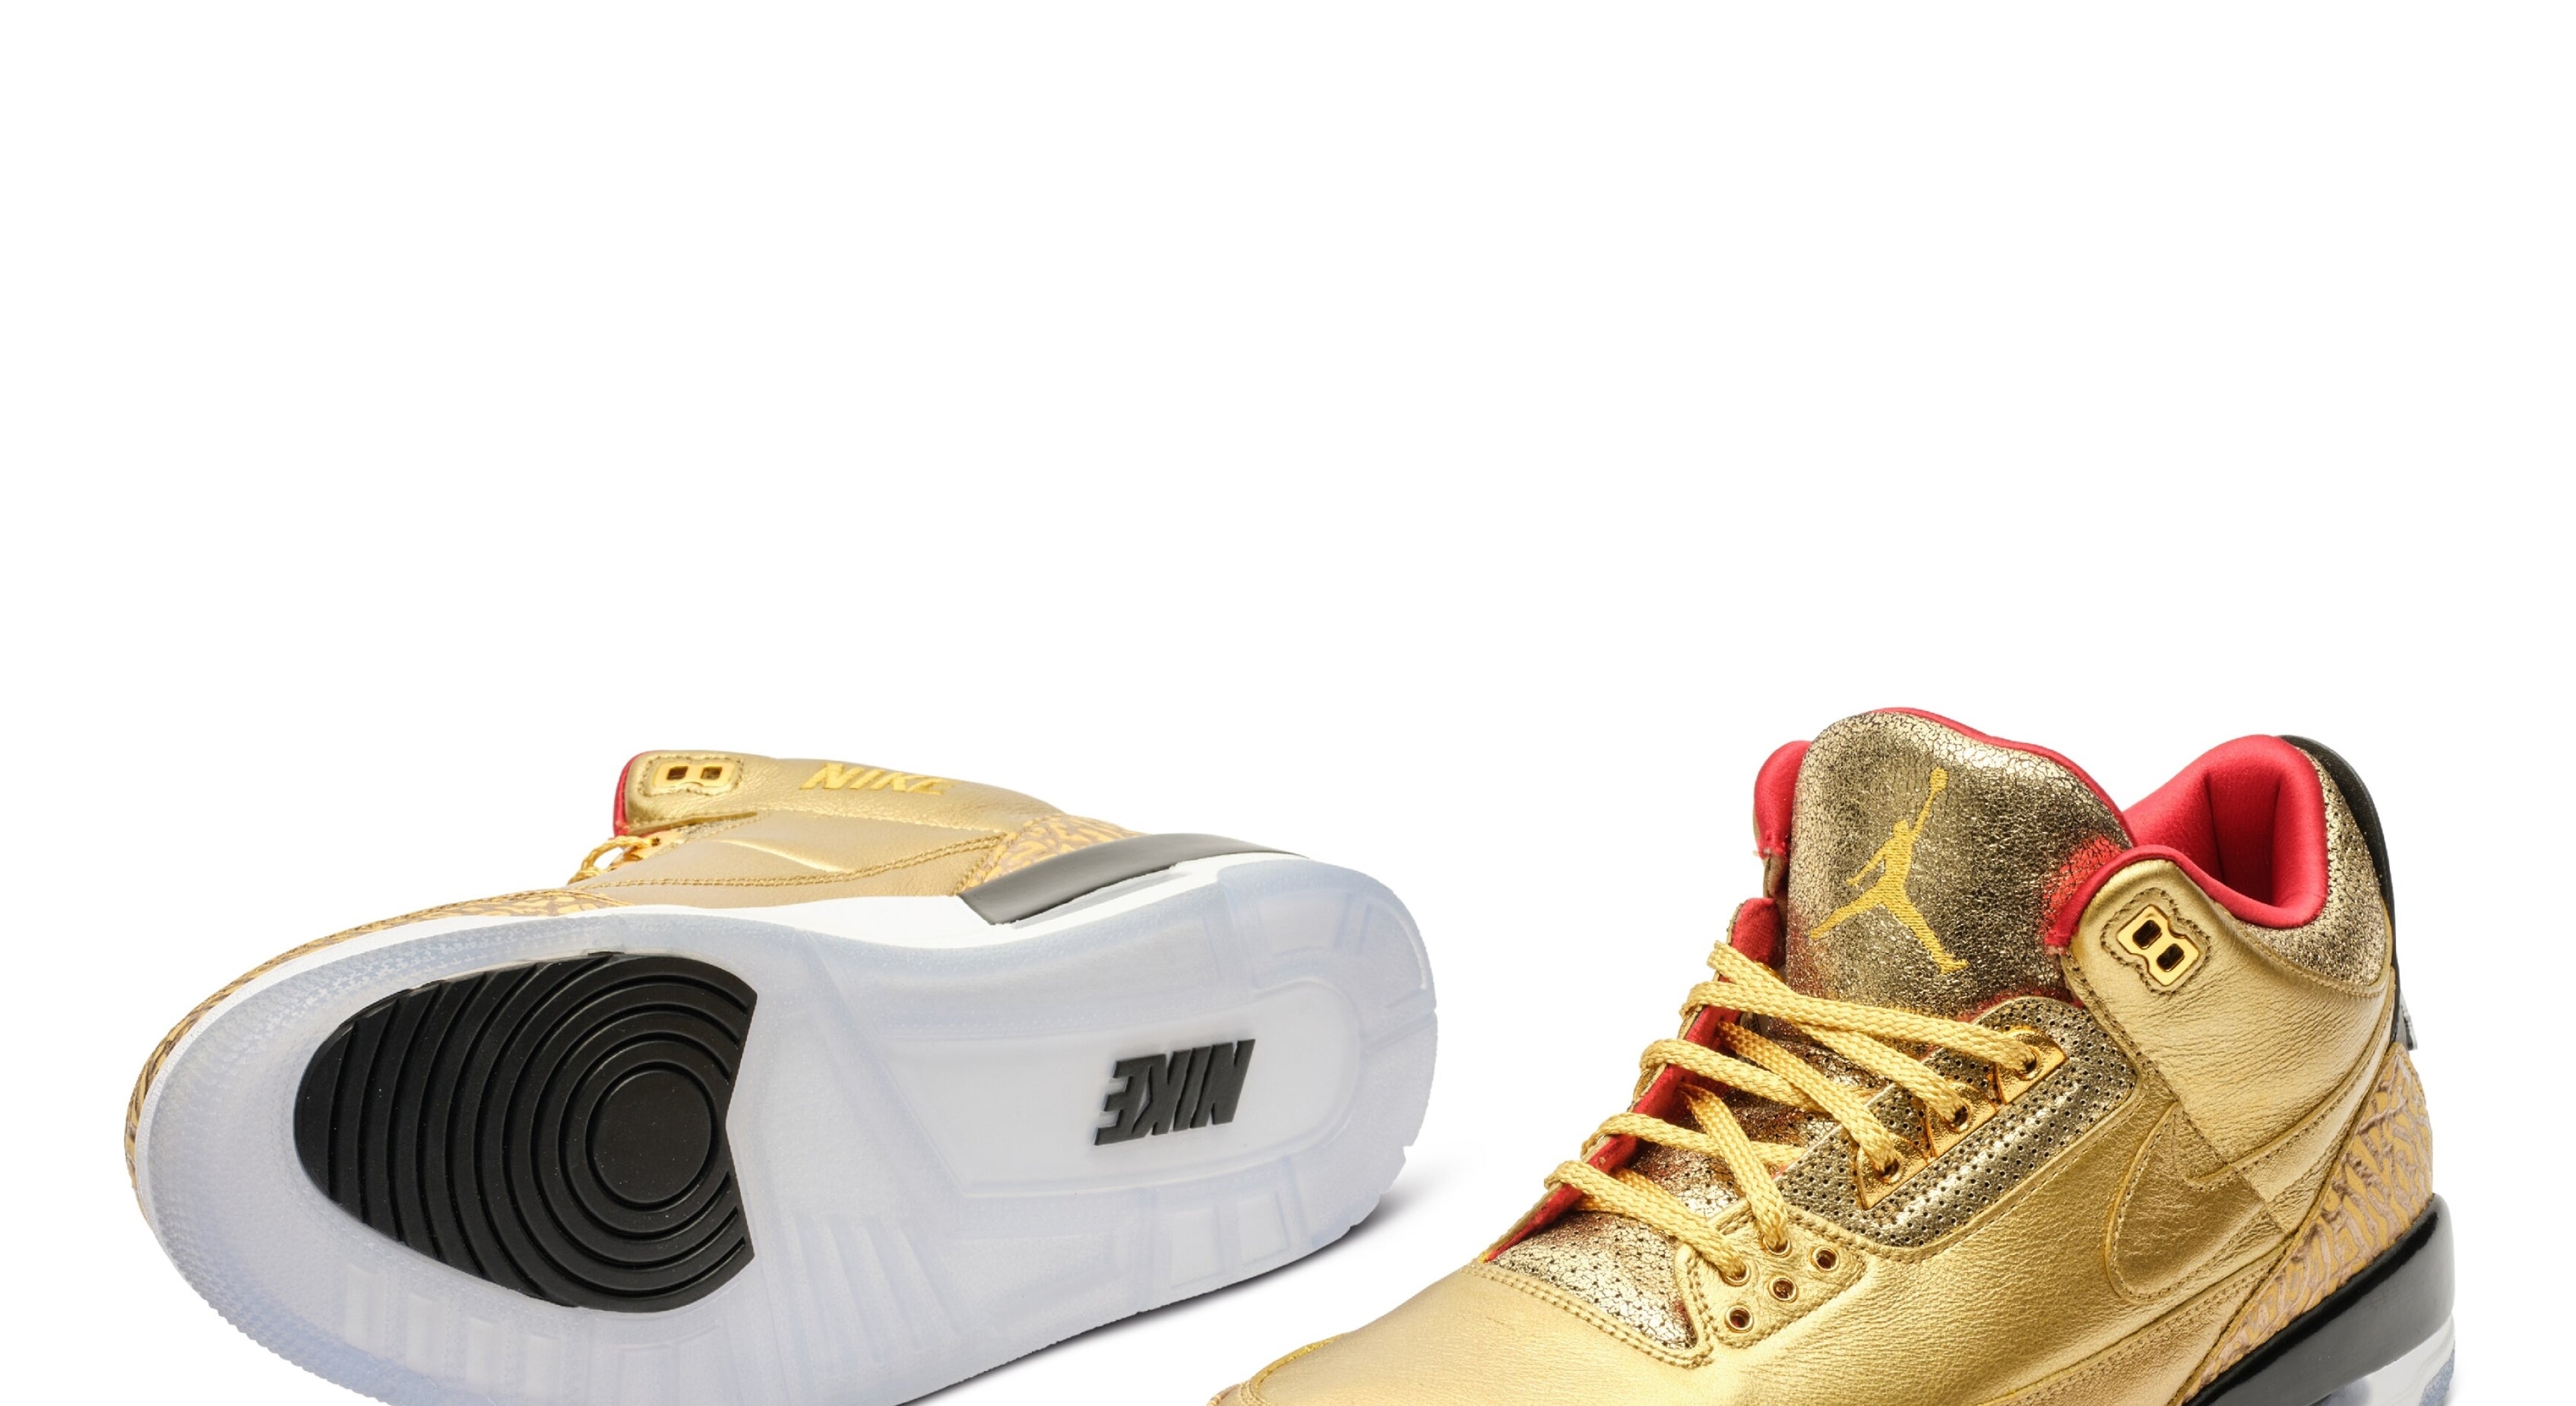 Gold Air Jordans Worth More Than $10,000 Found in a Donation Bin